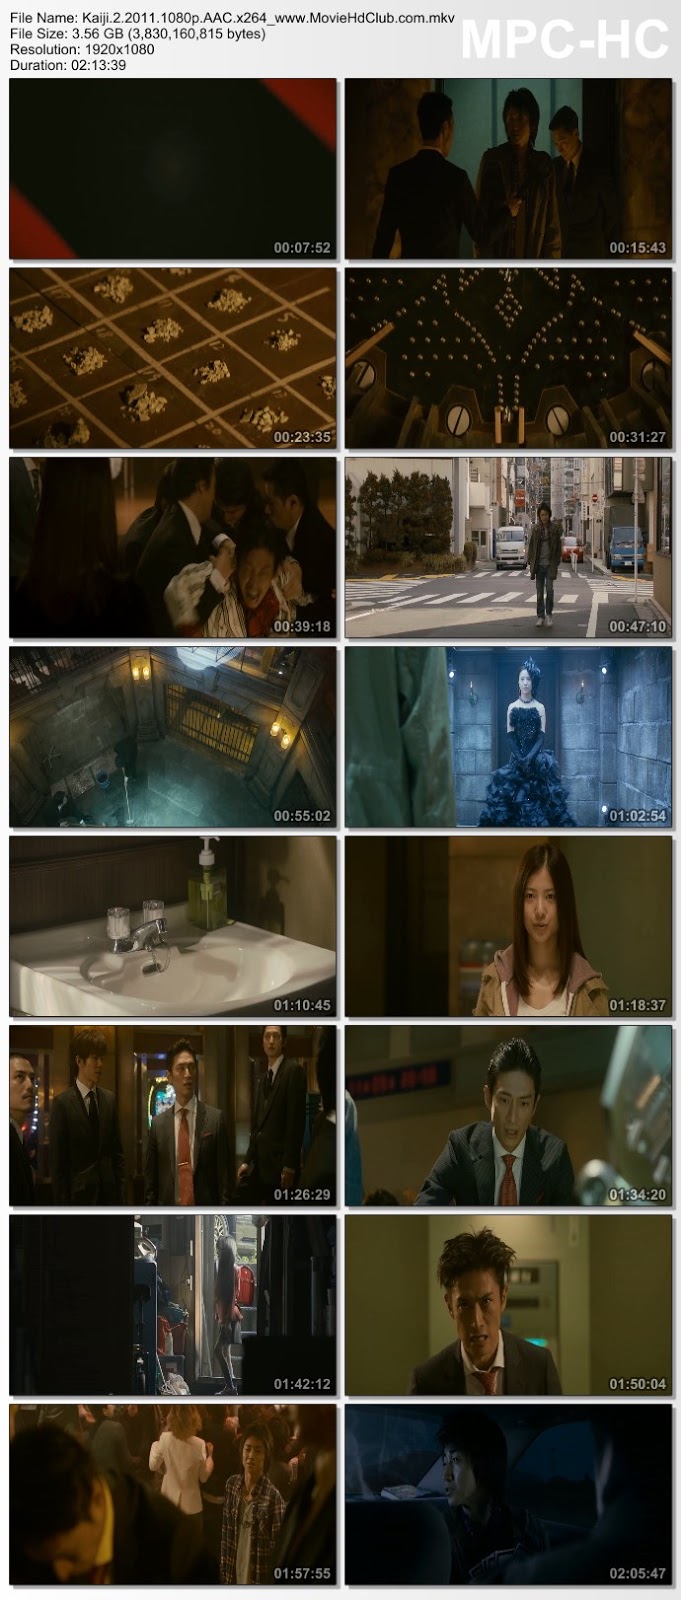 [Mini-HD][Boxset] Kaiji Collection (2009-2011) - ไคจิ กลโกงมรณะ ภาค 1-2 [1080p][เสียง:ไทย 2.0][ซับ:-][.MKV] KJ2_MovieHdClub_SS